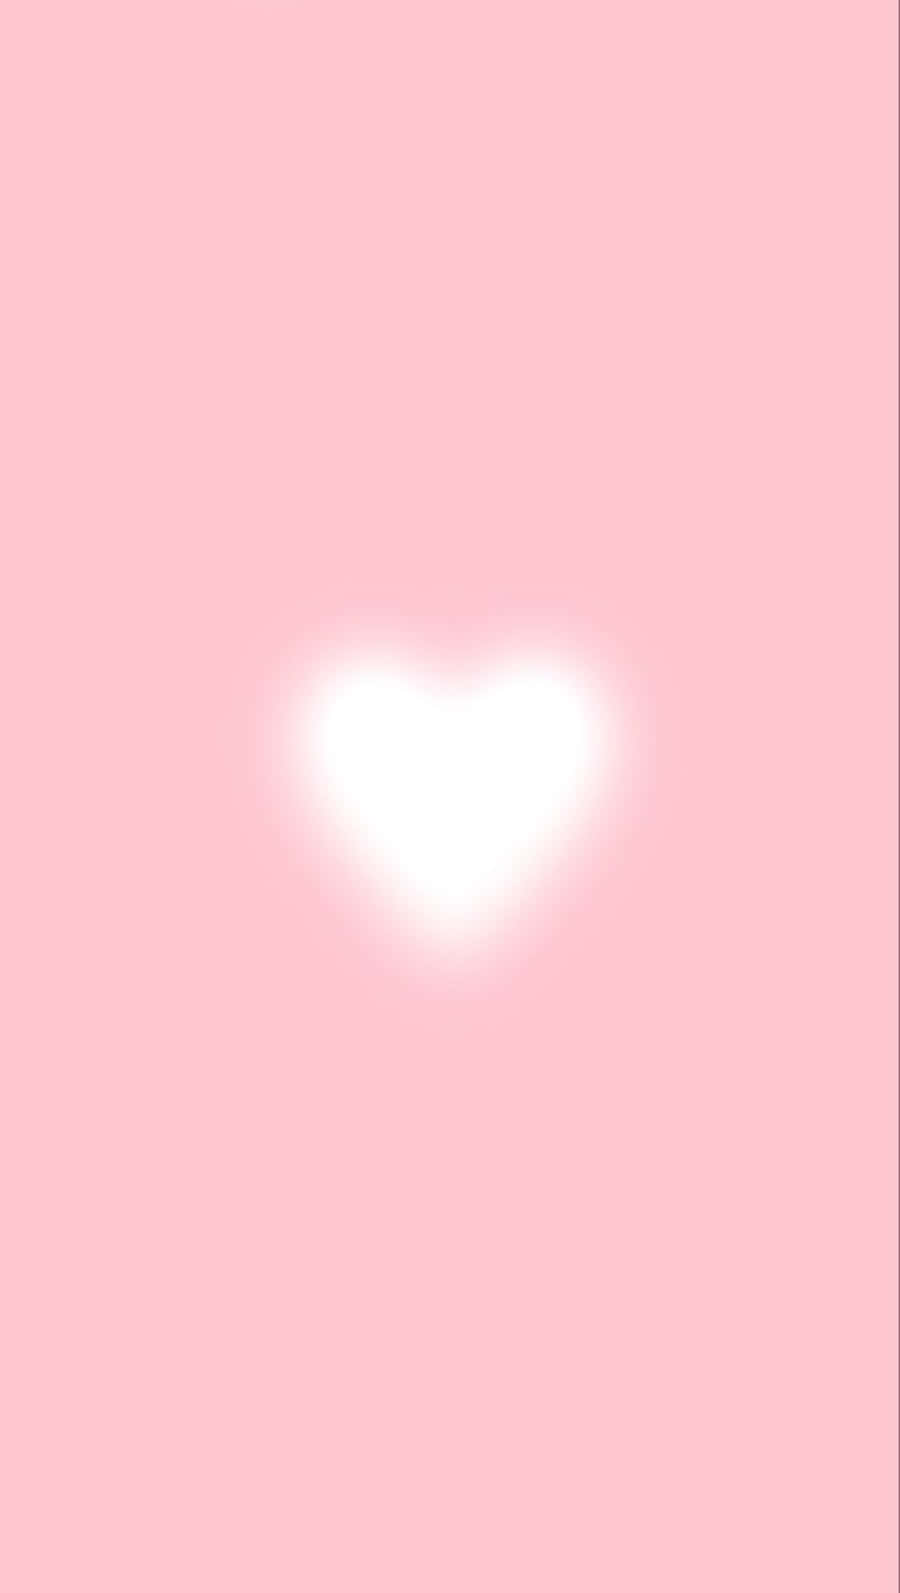 Glowing Heart Aura Pink Background Wallpaper